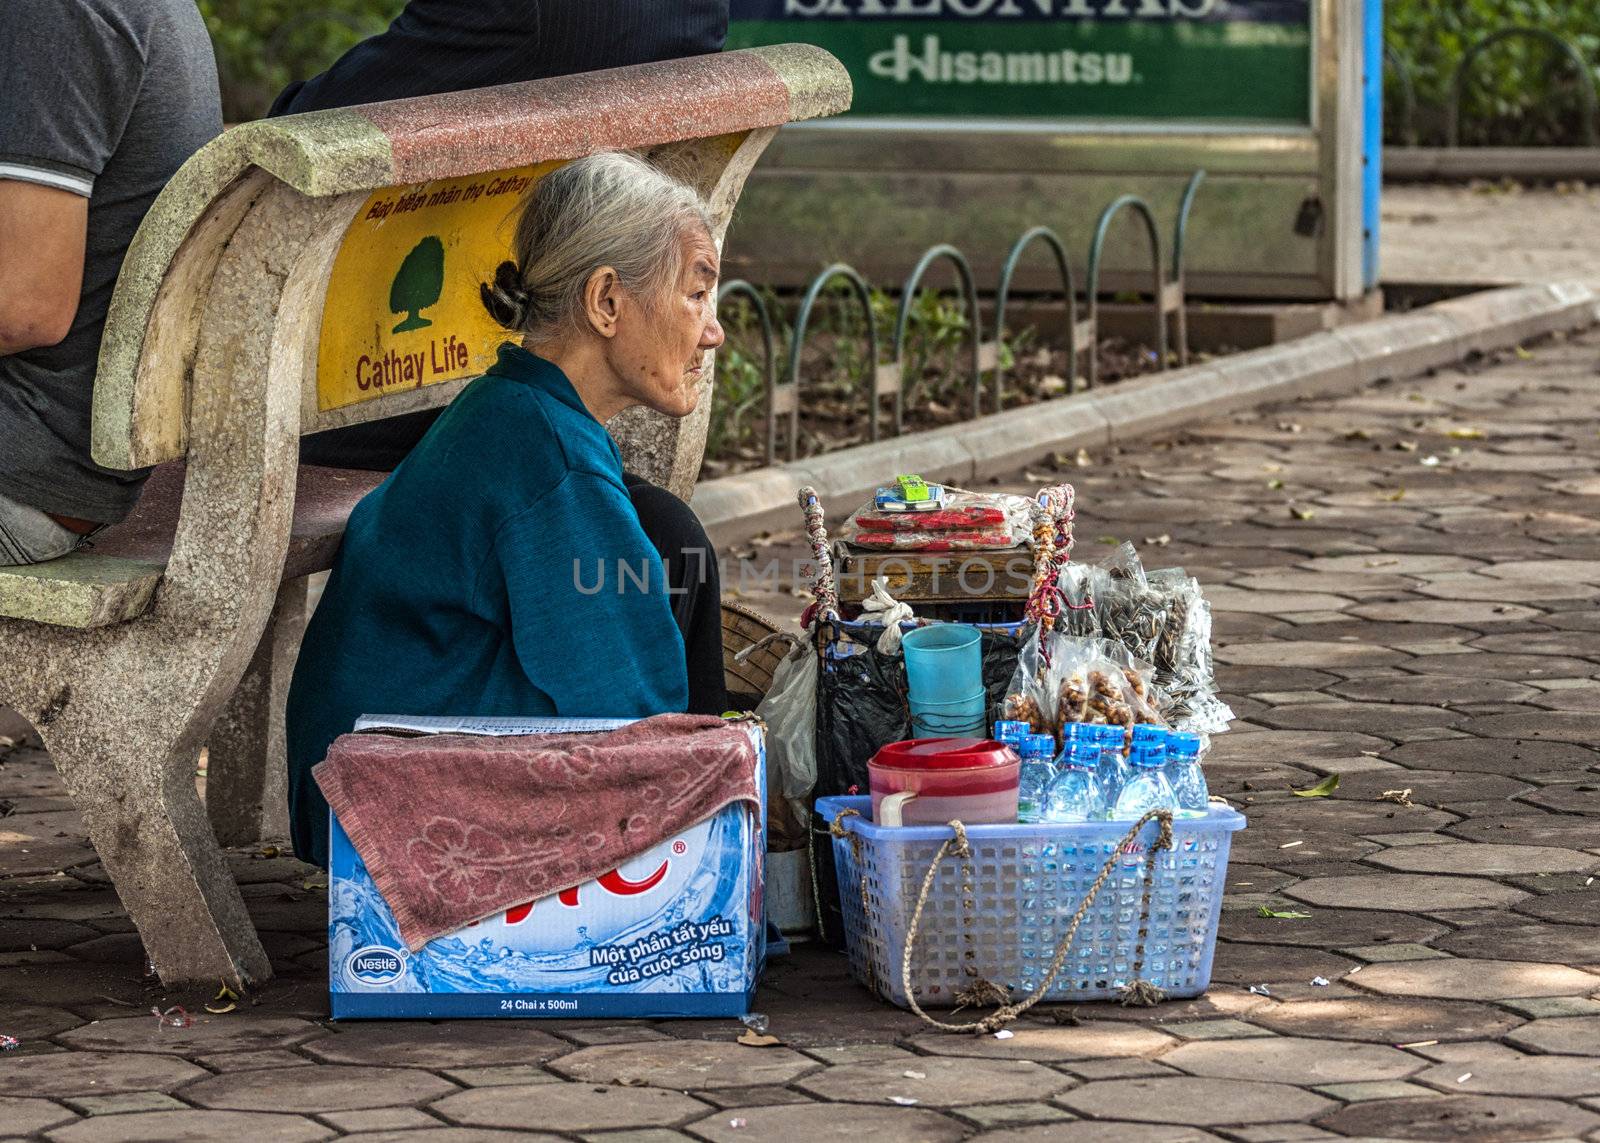 Vietnam Hanoi. Free enterprise as savior of retirement.